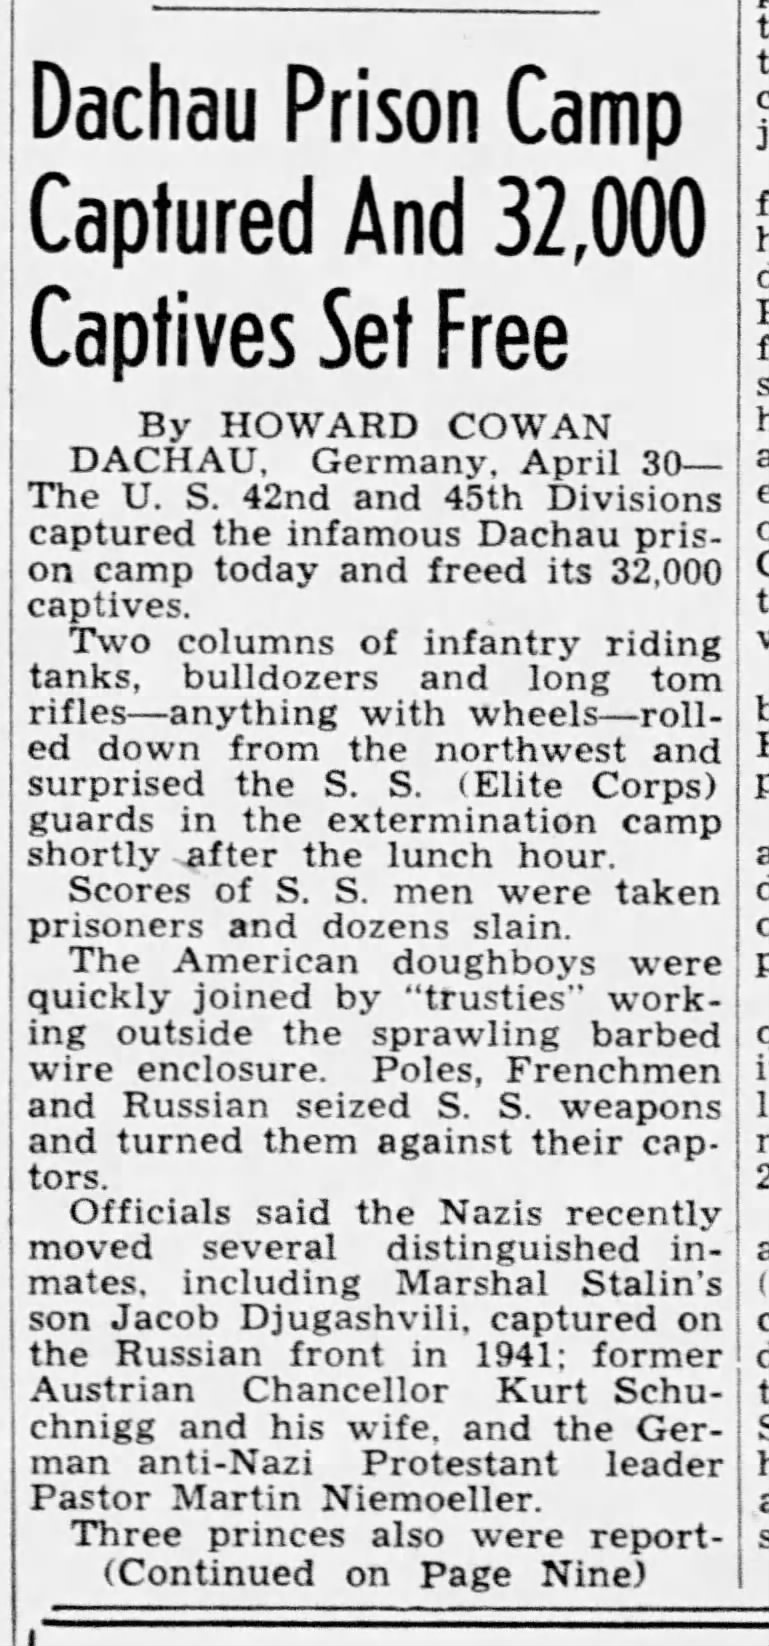 Dachau Prison Camp Captured And 32,000 Captives Set Free